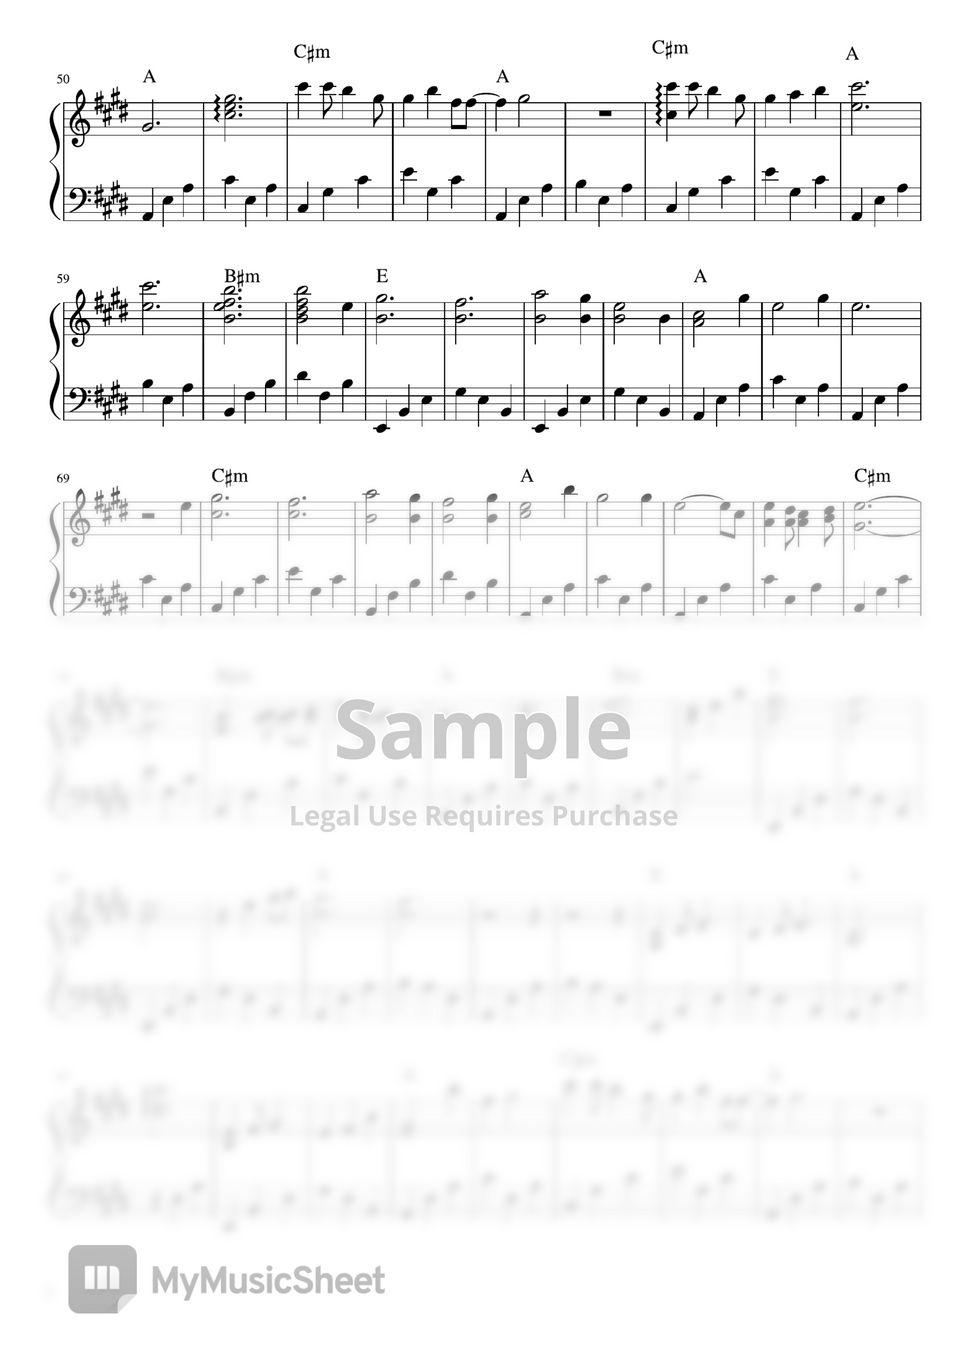 Moira x Ben&Ben - Paalam (piano sheet music) by Mel's Music Corner